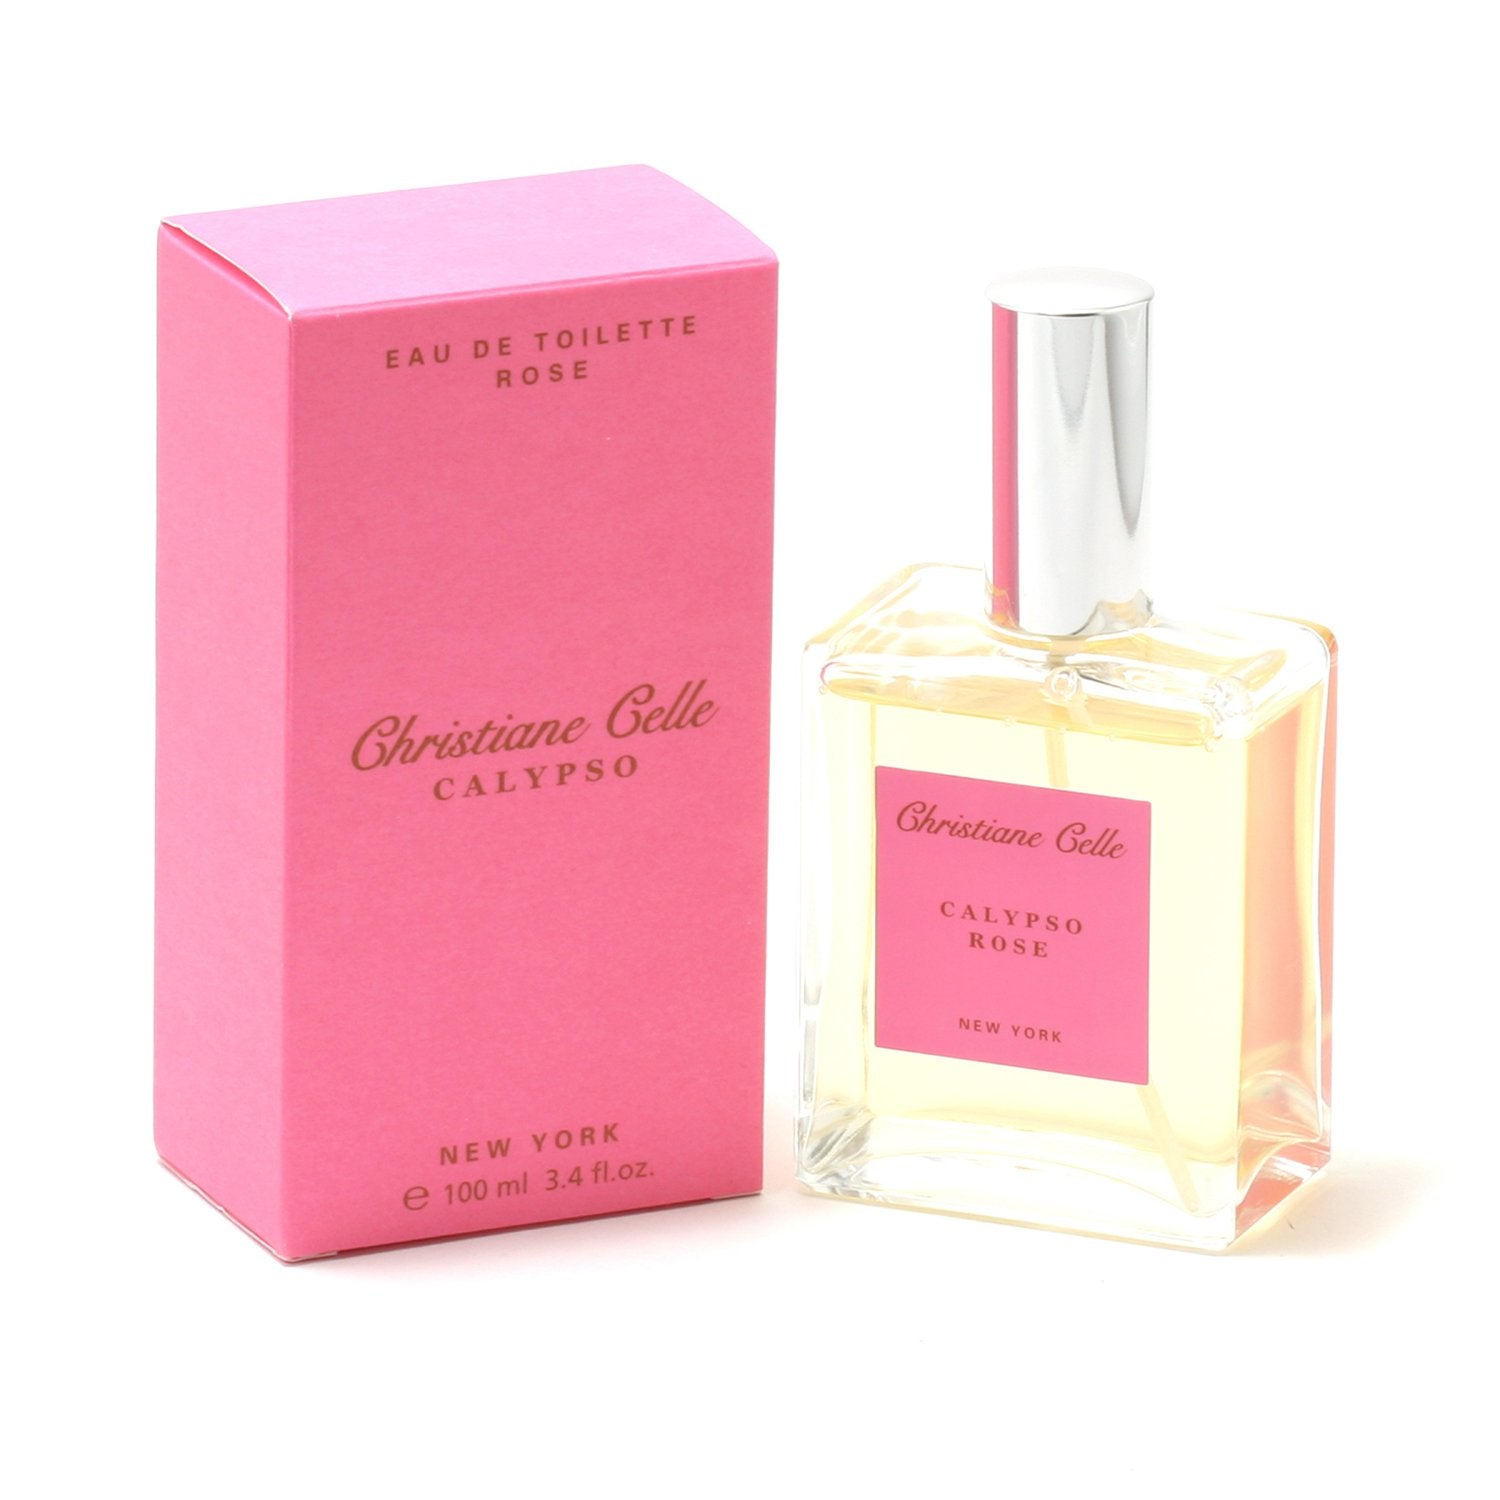 Perfume - CALYPSO ROSE FOR WOMEN BY CHRISTIANE CELLE - EAU DE TOILETTE SPRAY, 3.4 OZ